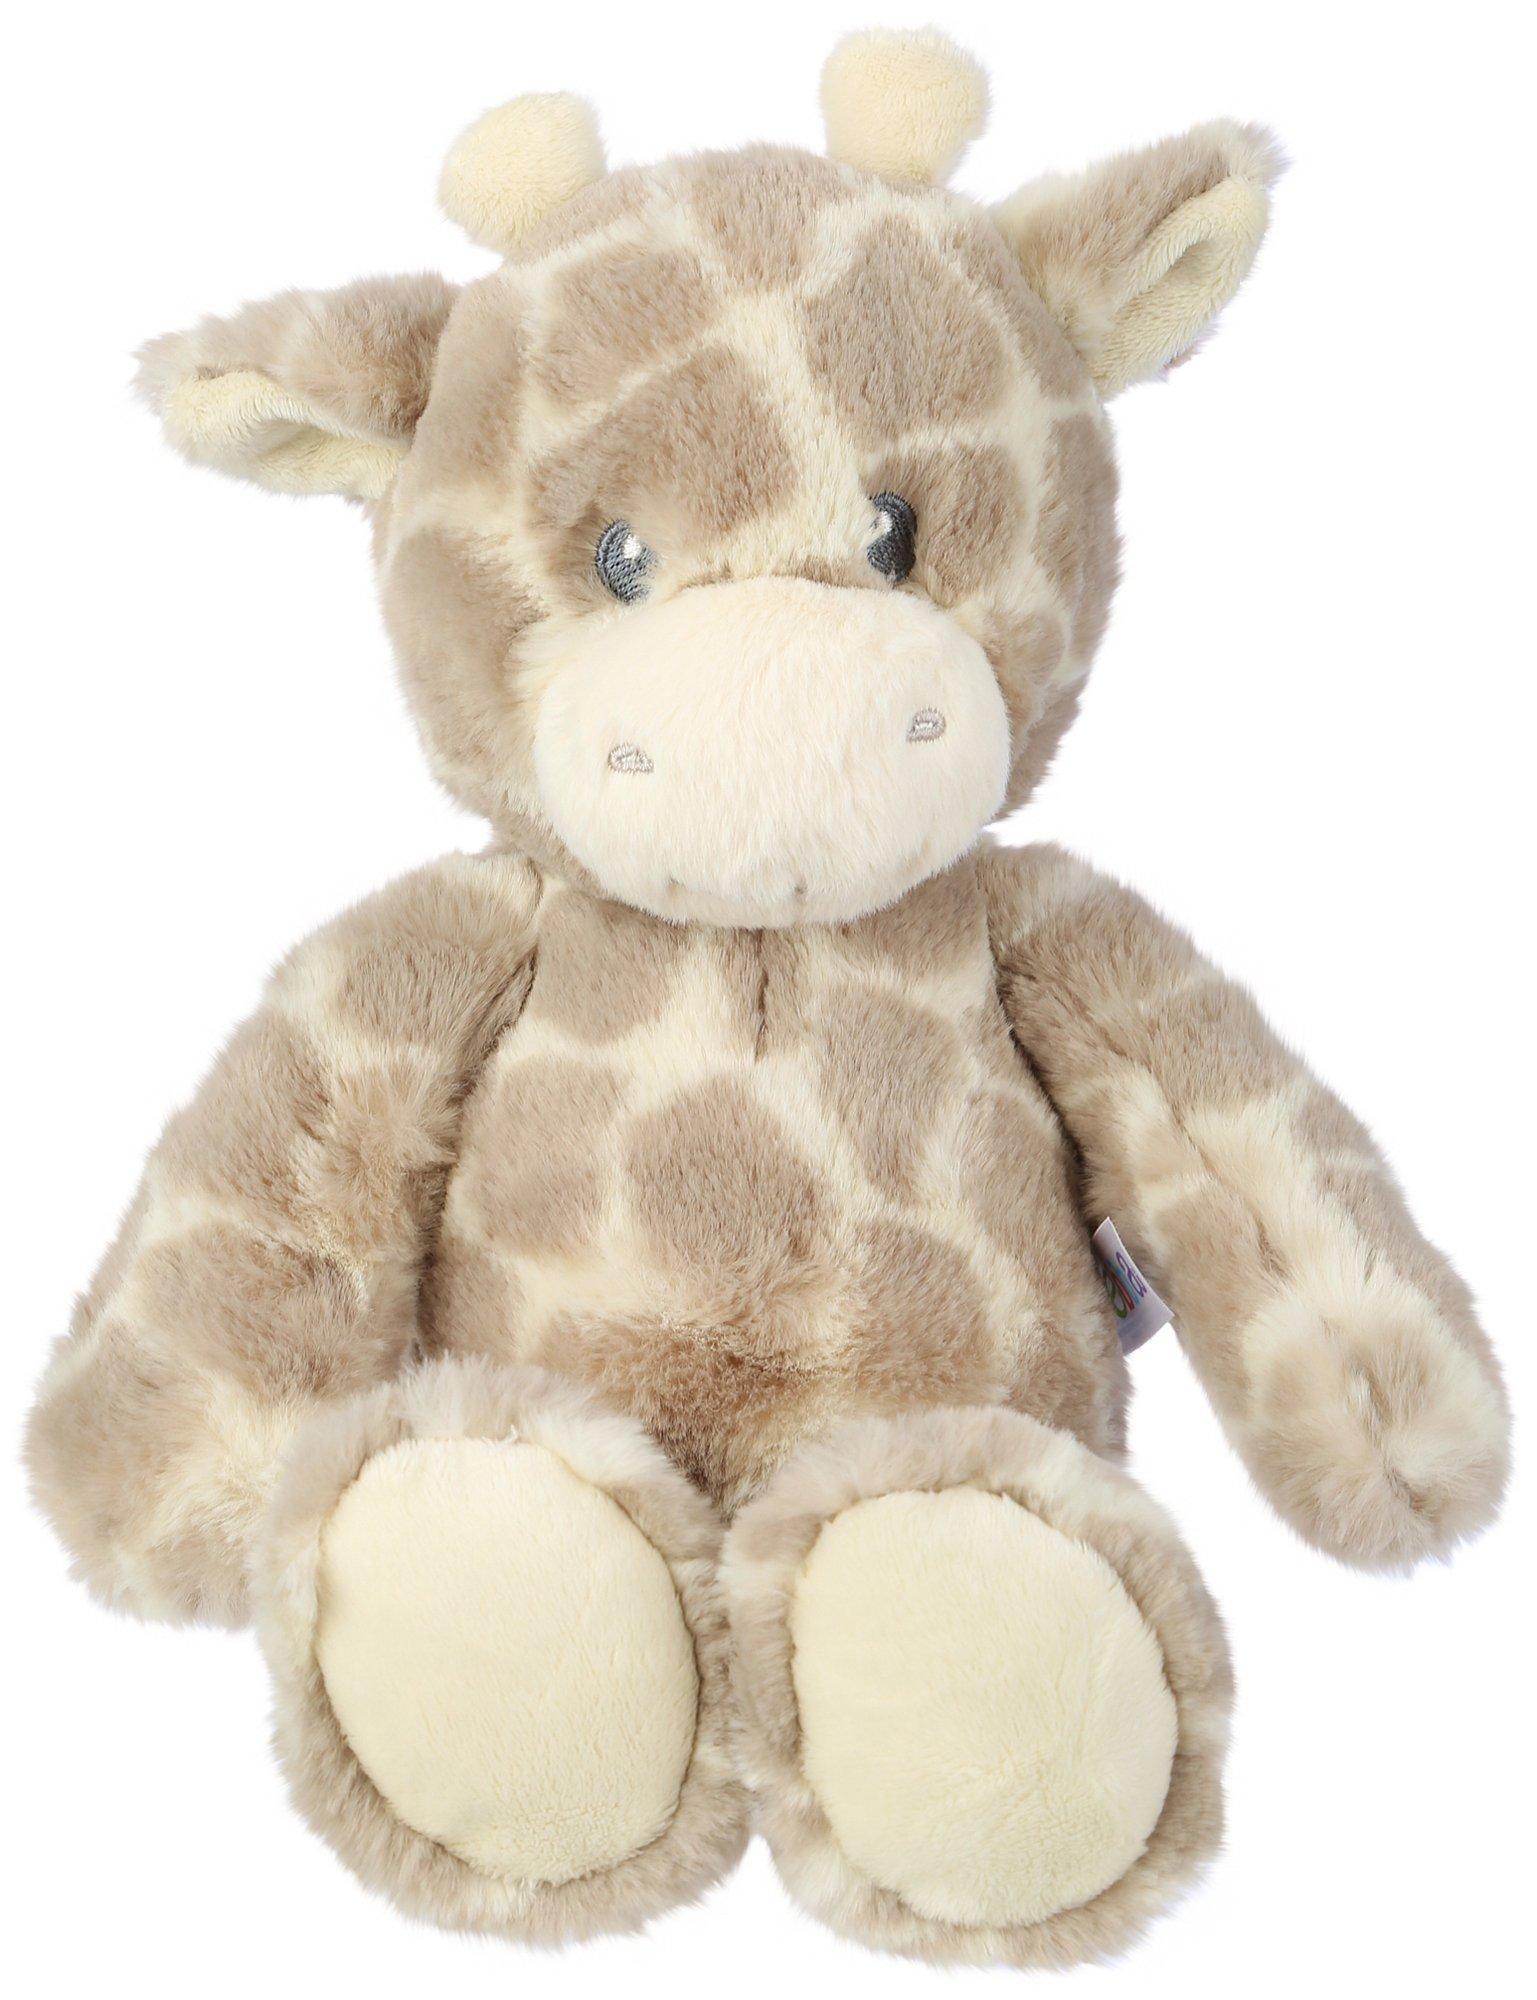 Cuddlers Giraffe Plush Toy